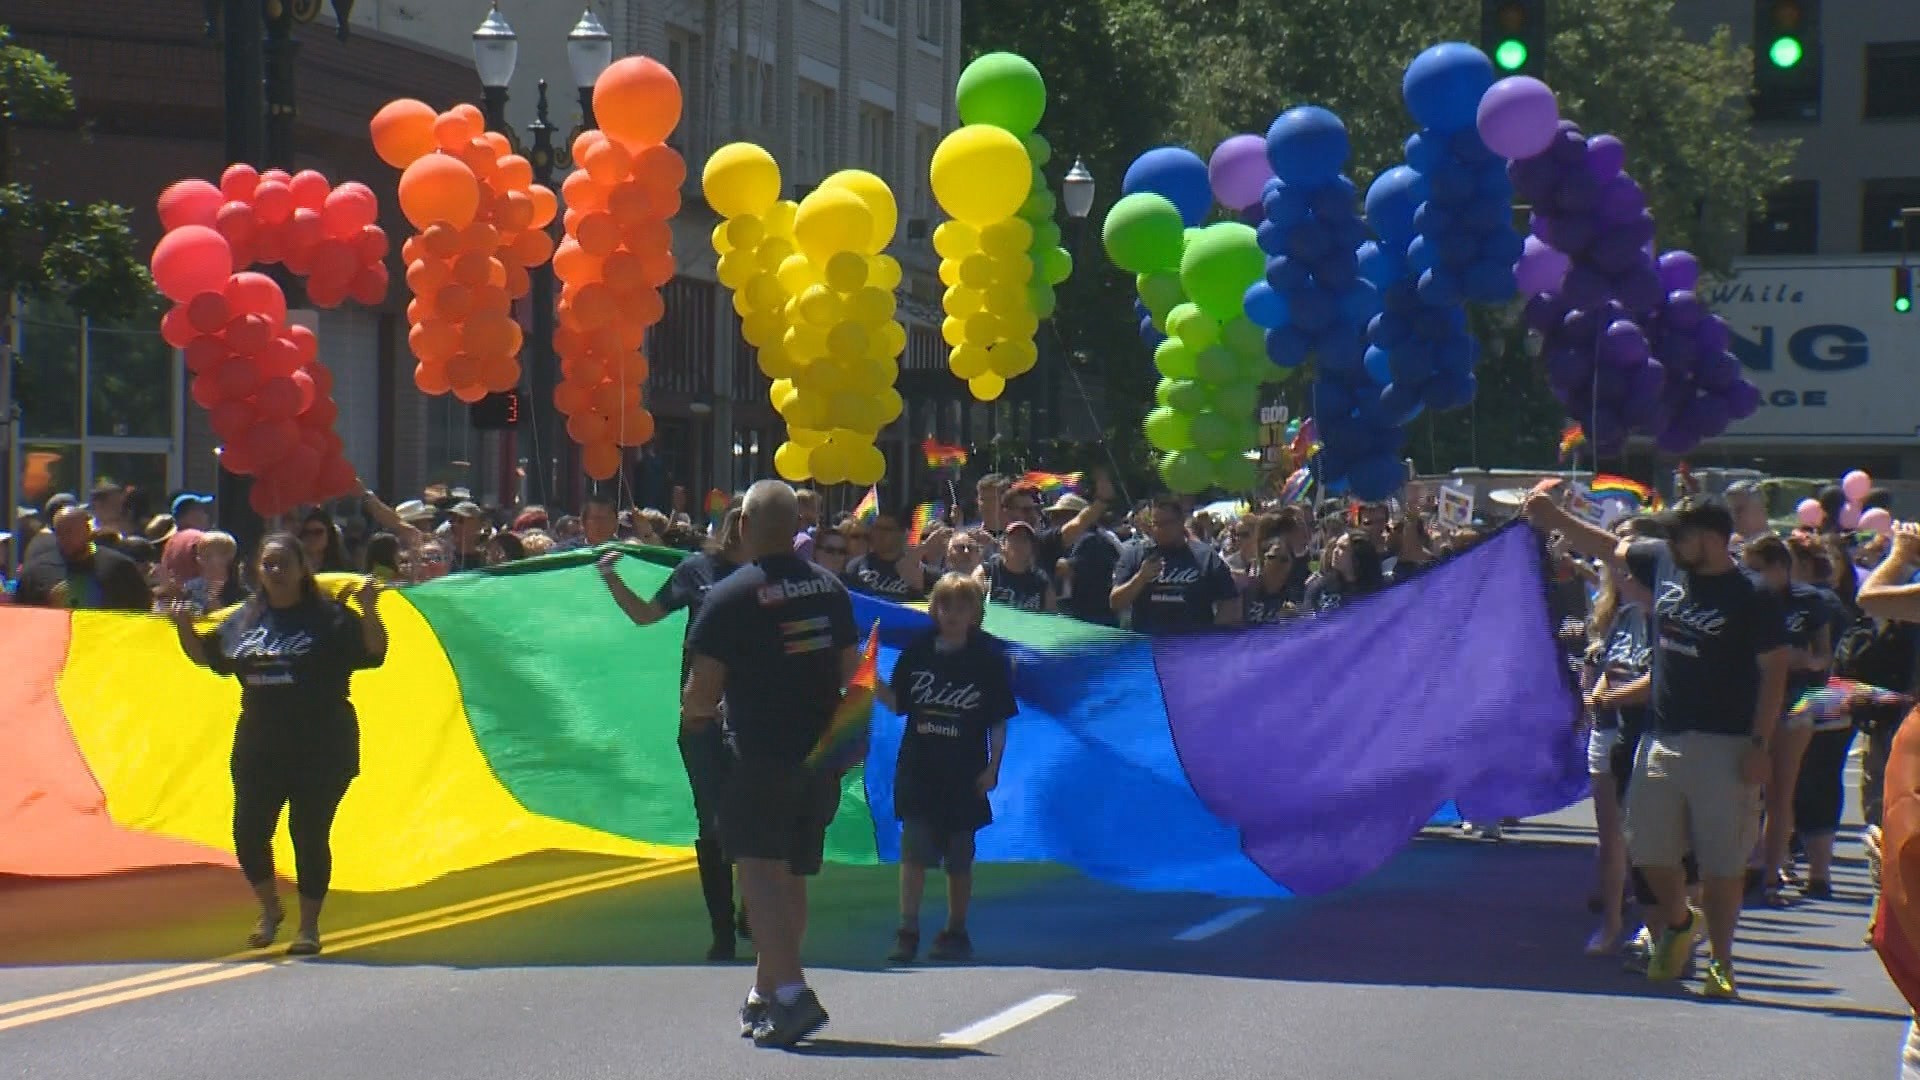 Photos and video Portland Pride Festival